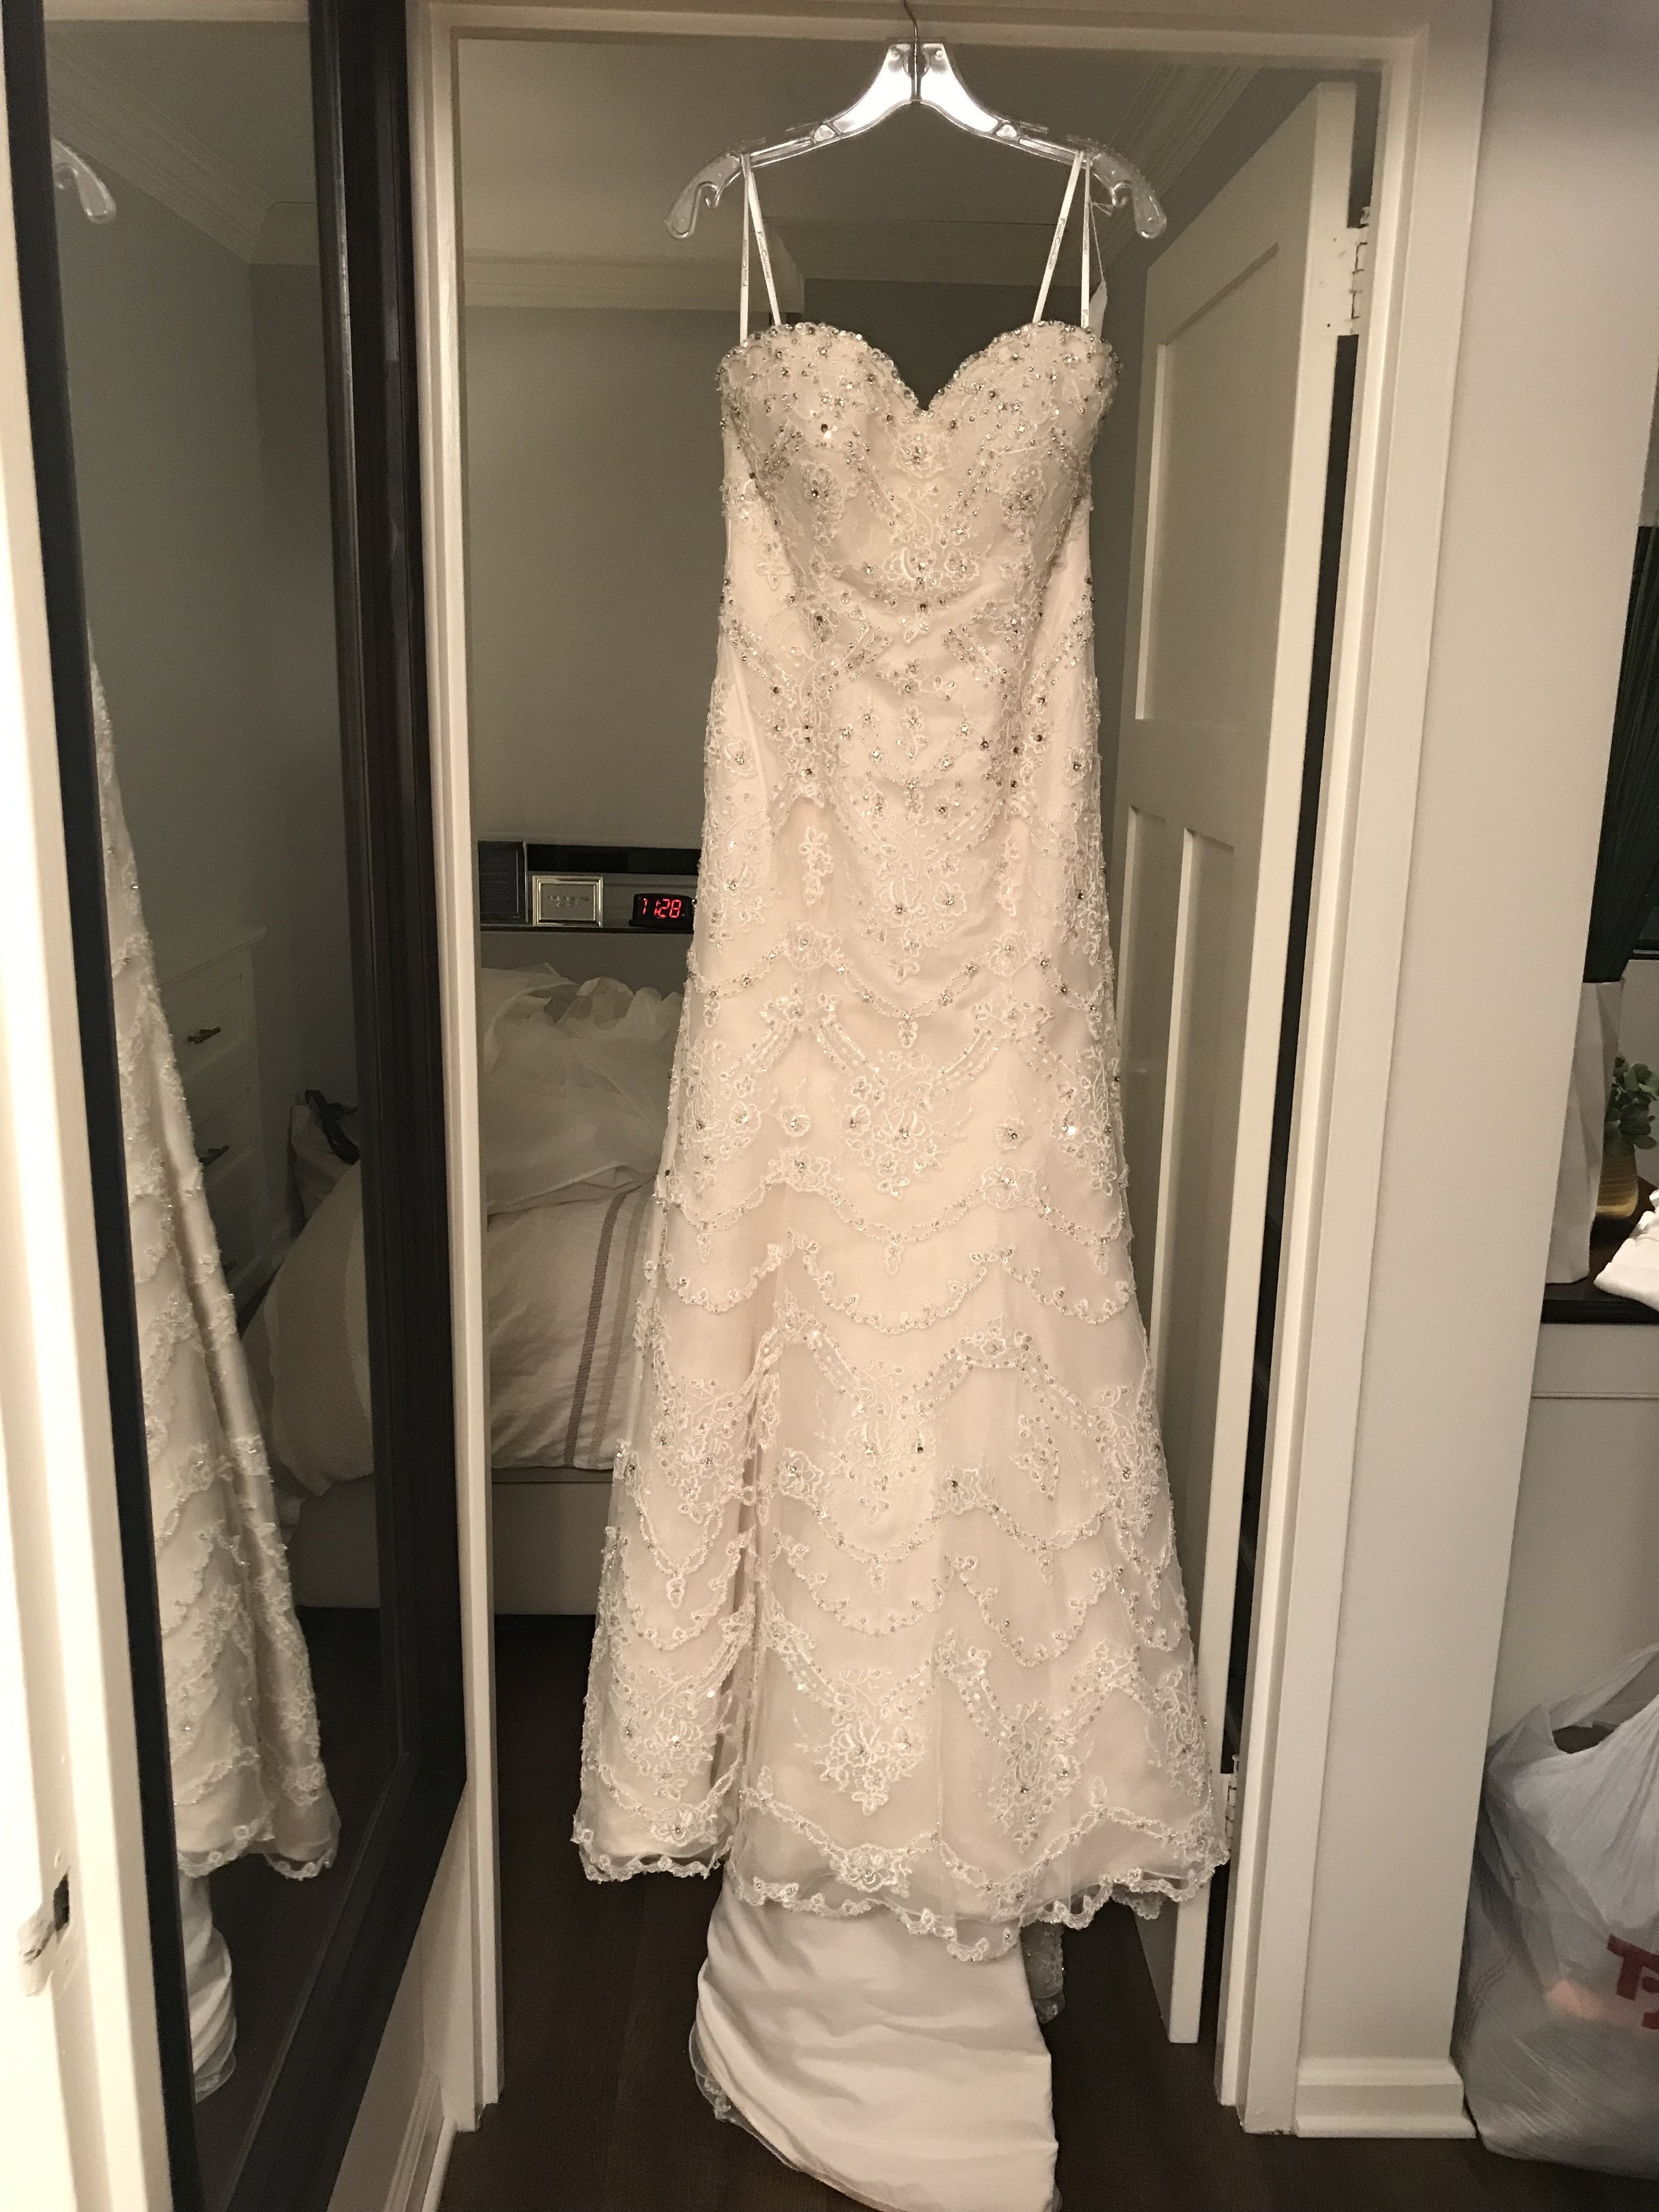 Fiore Couture 'Amanda' size 10 sample wedding dress – Nearly Newlywed